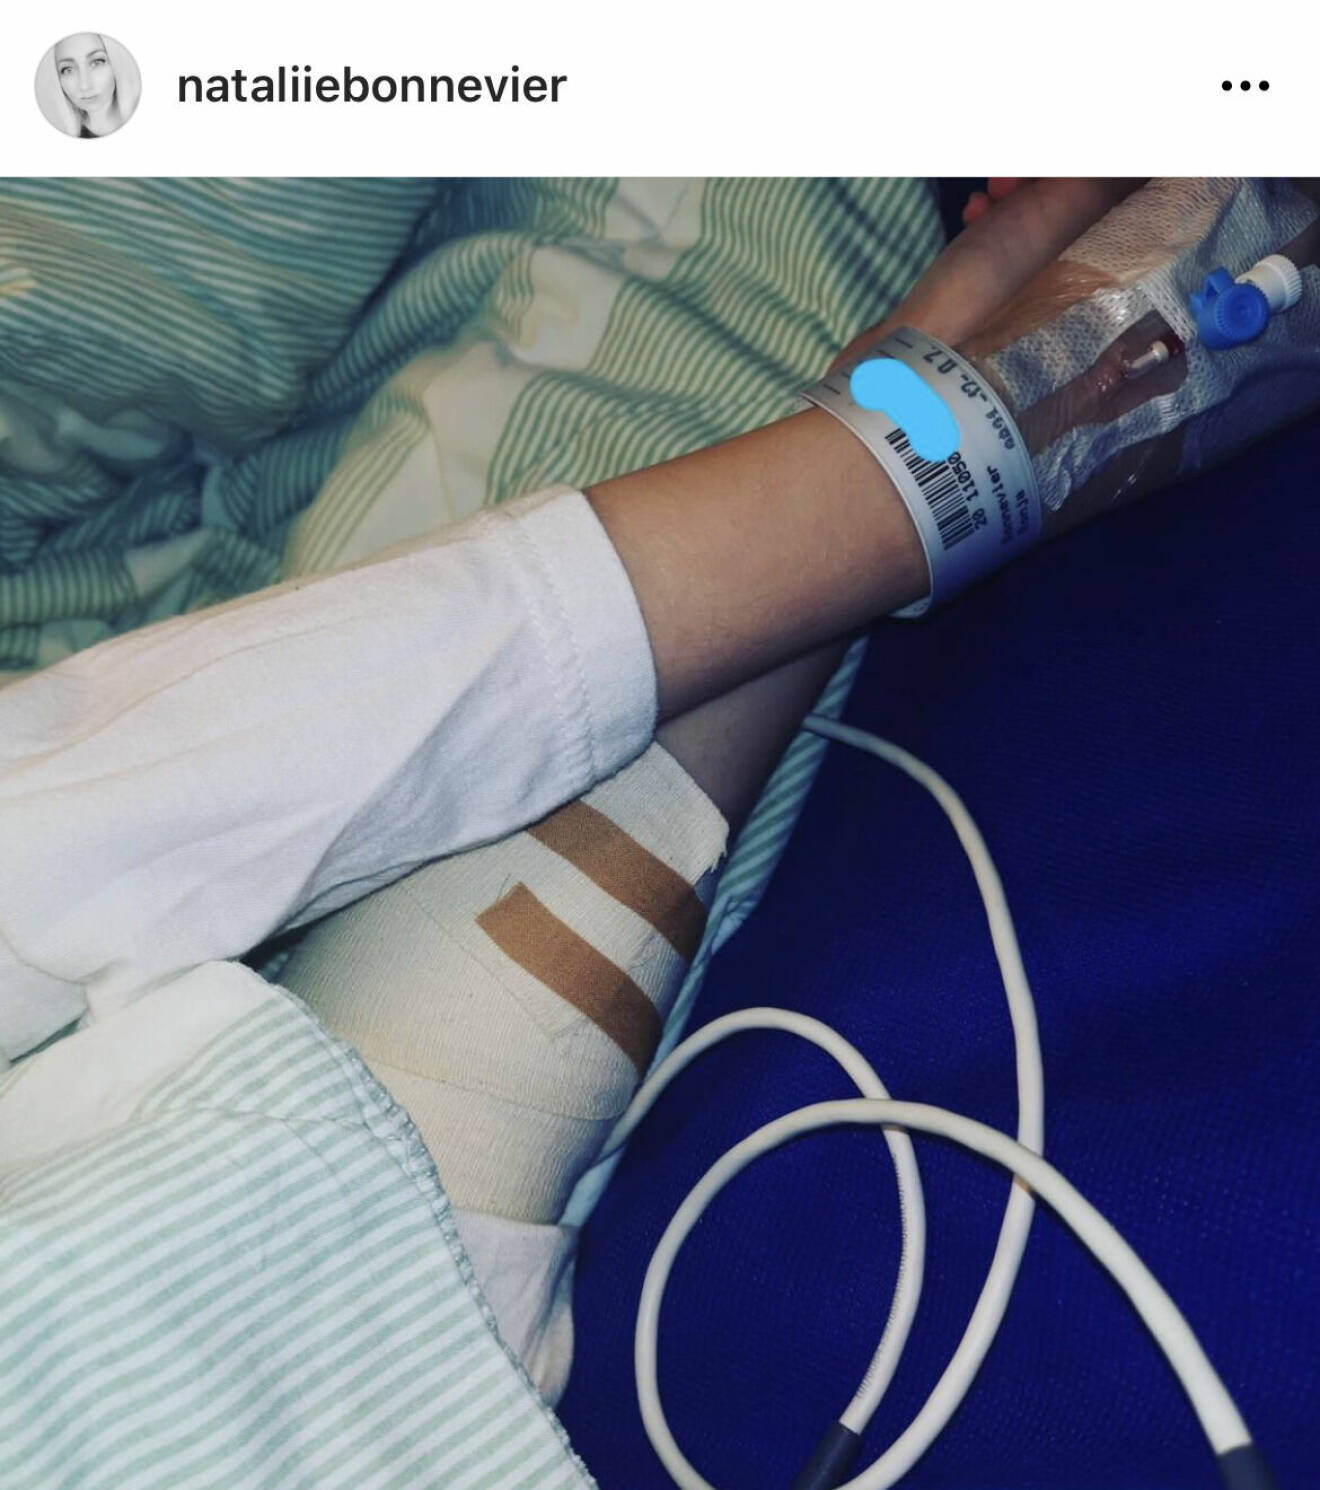 Nataliies Instagrampost efter dotterns operation.